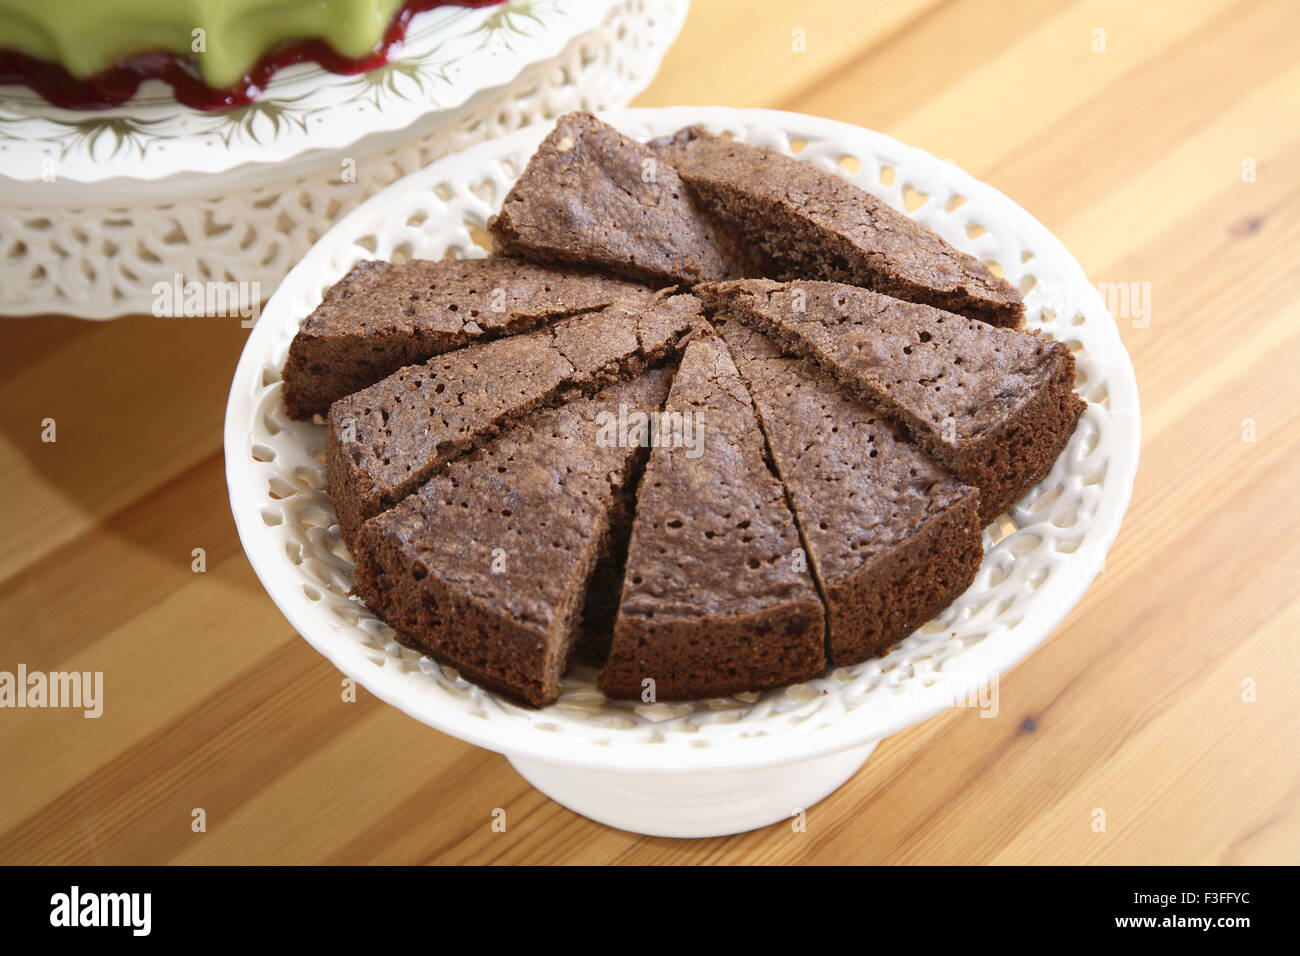 Postre : Tarta de chocolate redondo cortado en pedazos triangulares Foto de stock